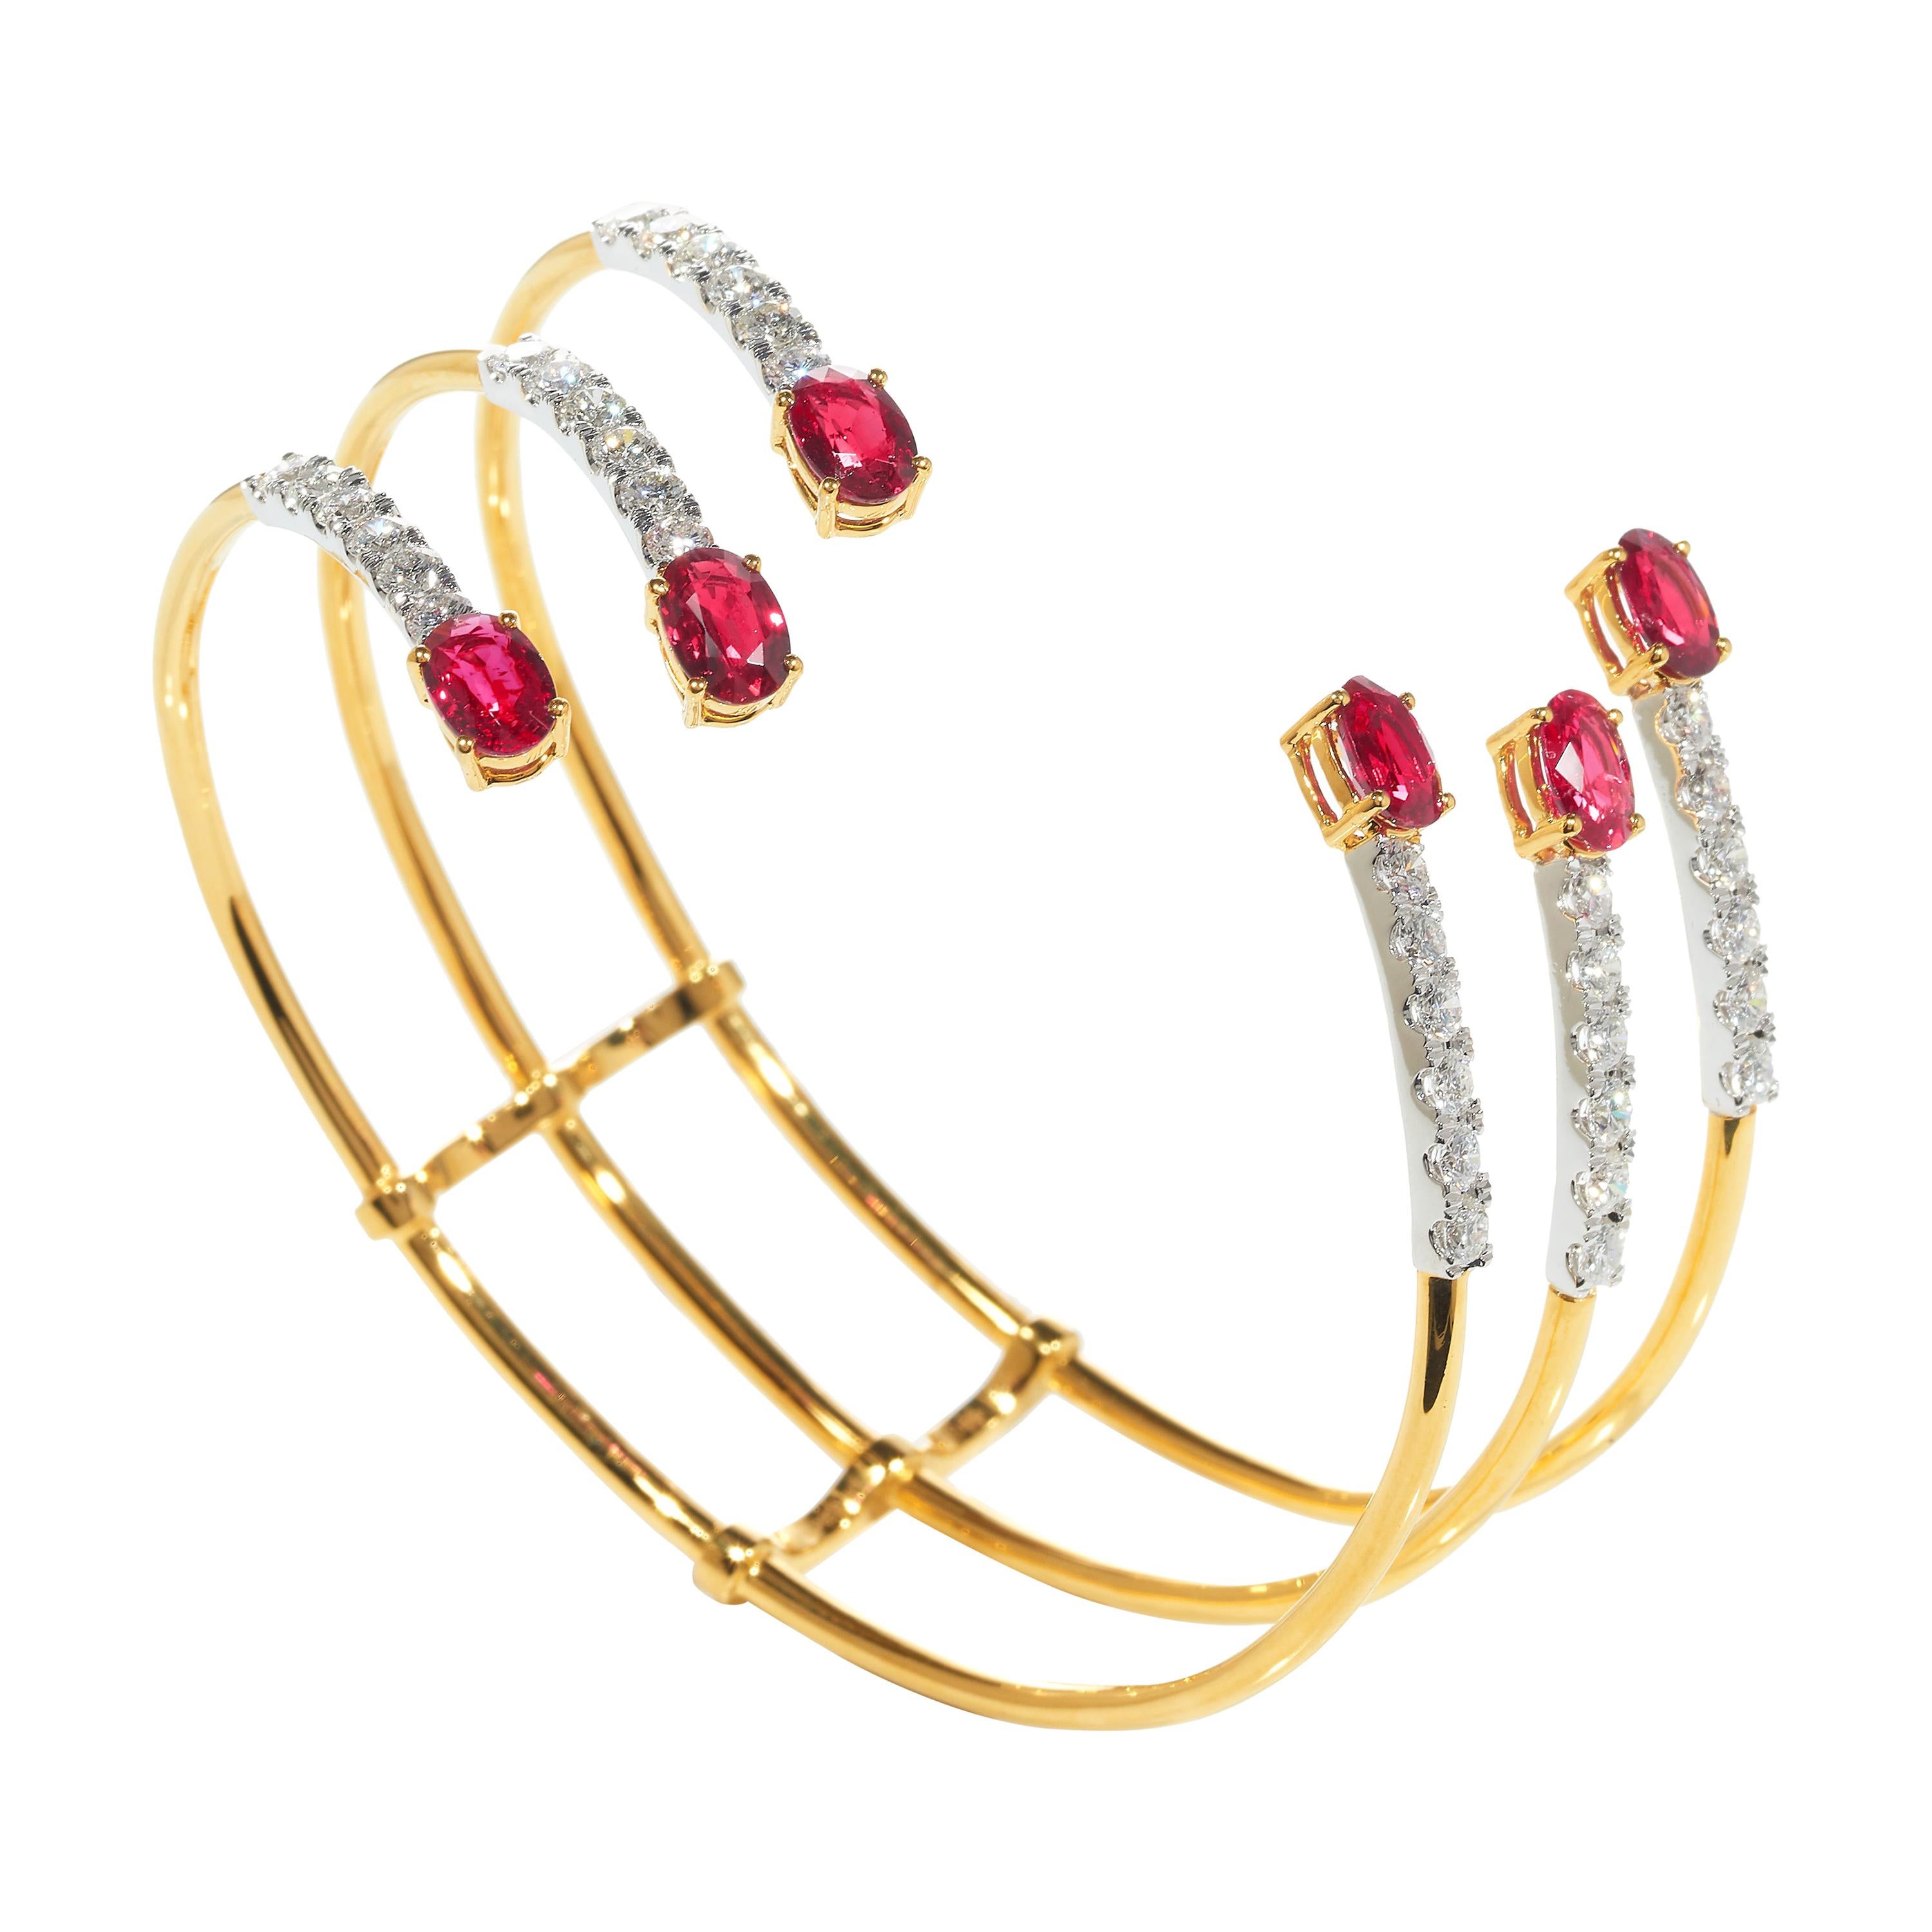 3-Prong Bracelet, 18 Karat Yellow and White Gold, Ruby, Diamonds Bangle For Sale